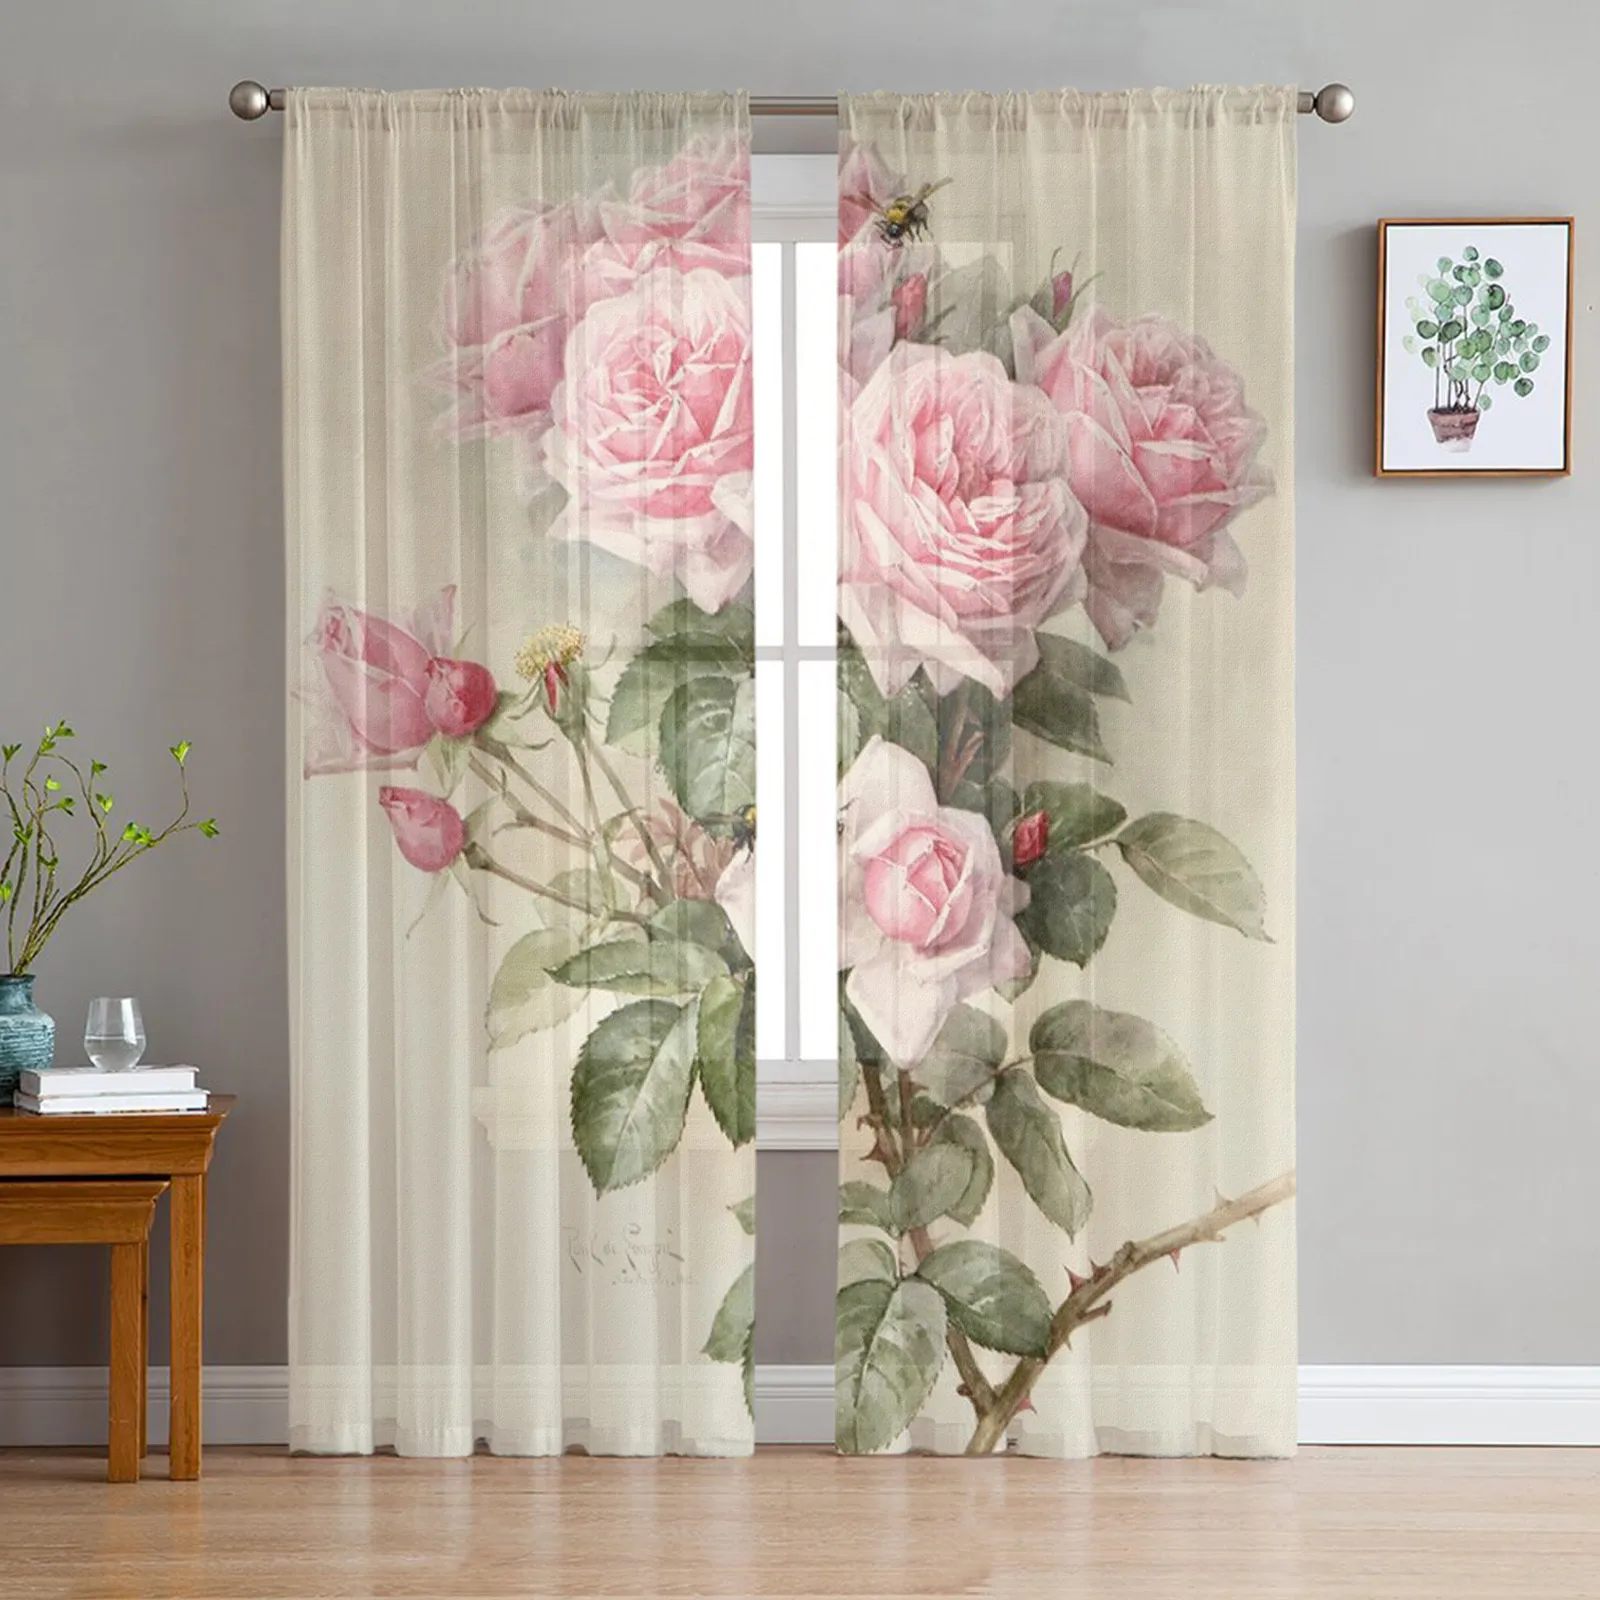 Cortina rosa Vintage de tul para ventana, cortina para sala de estar, cortina transparente moderna para dormitorio, cocina, cortinas personalizadas 221022